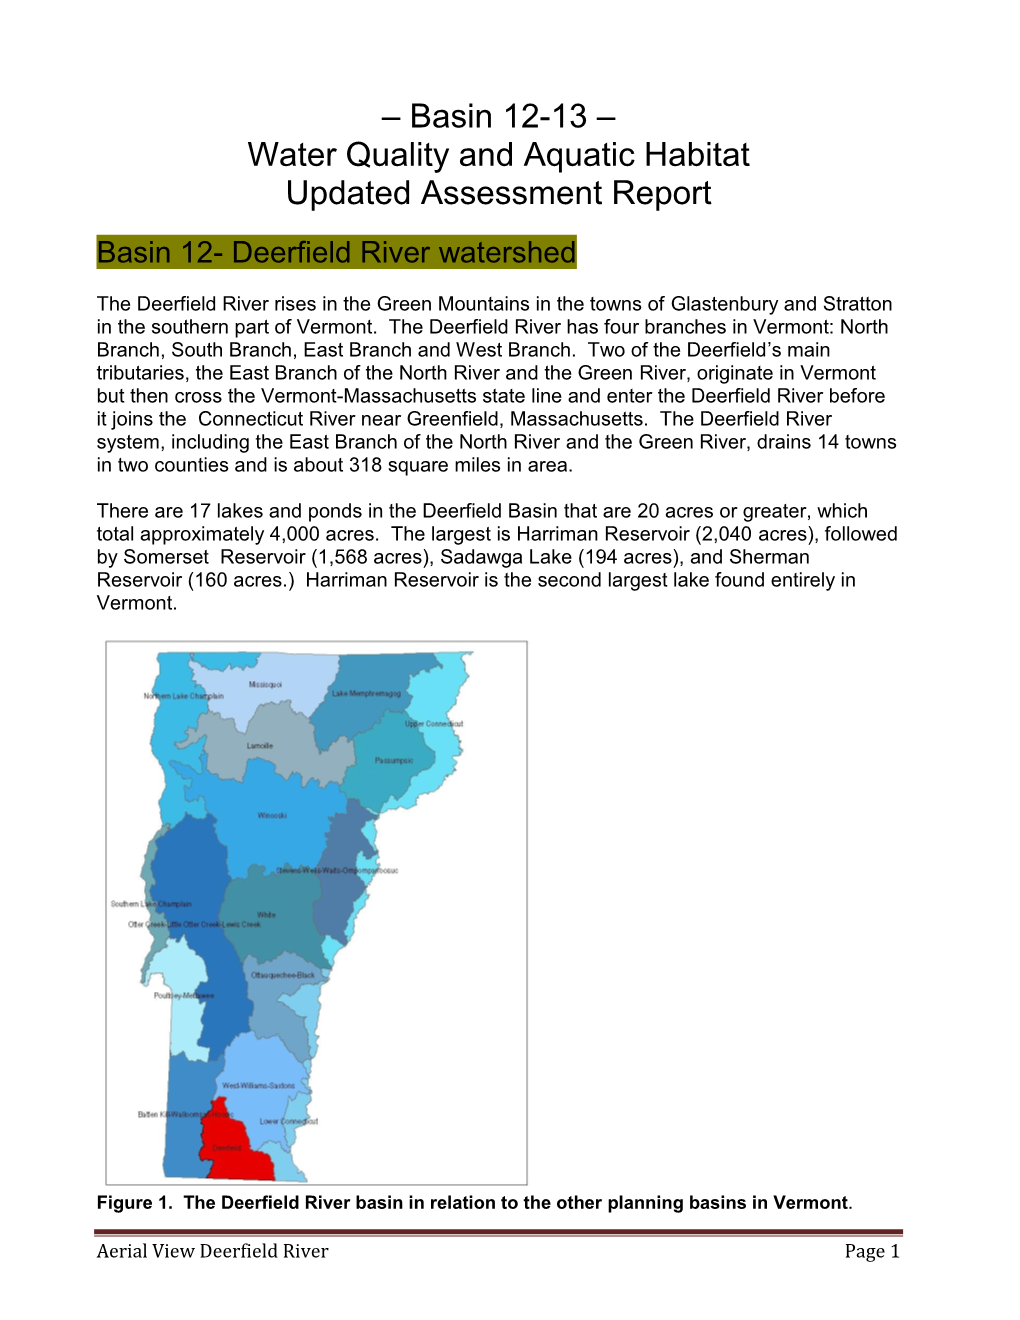 Water Quality and Aquatic Habitat Updated Assessment Report